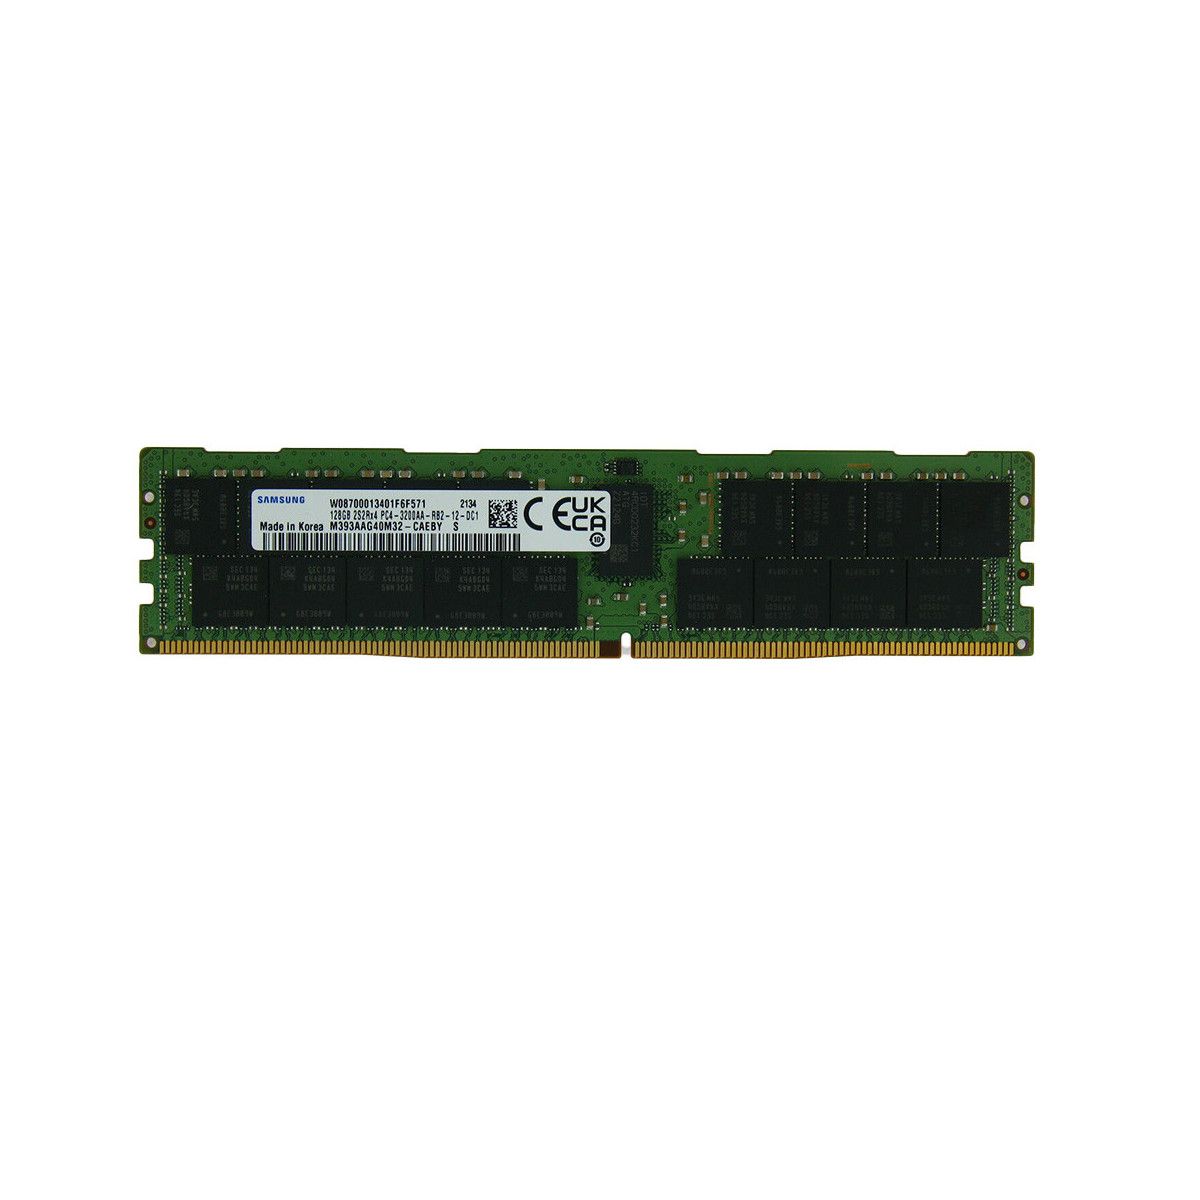 HMABAGR7A2R4N-XS-MS - Memstar 1x 128GB DDR4-3200 RDIMM PC4-25600R - Mem-Star OEM Memoria compatibile 1 - Memstar 